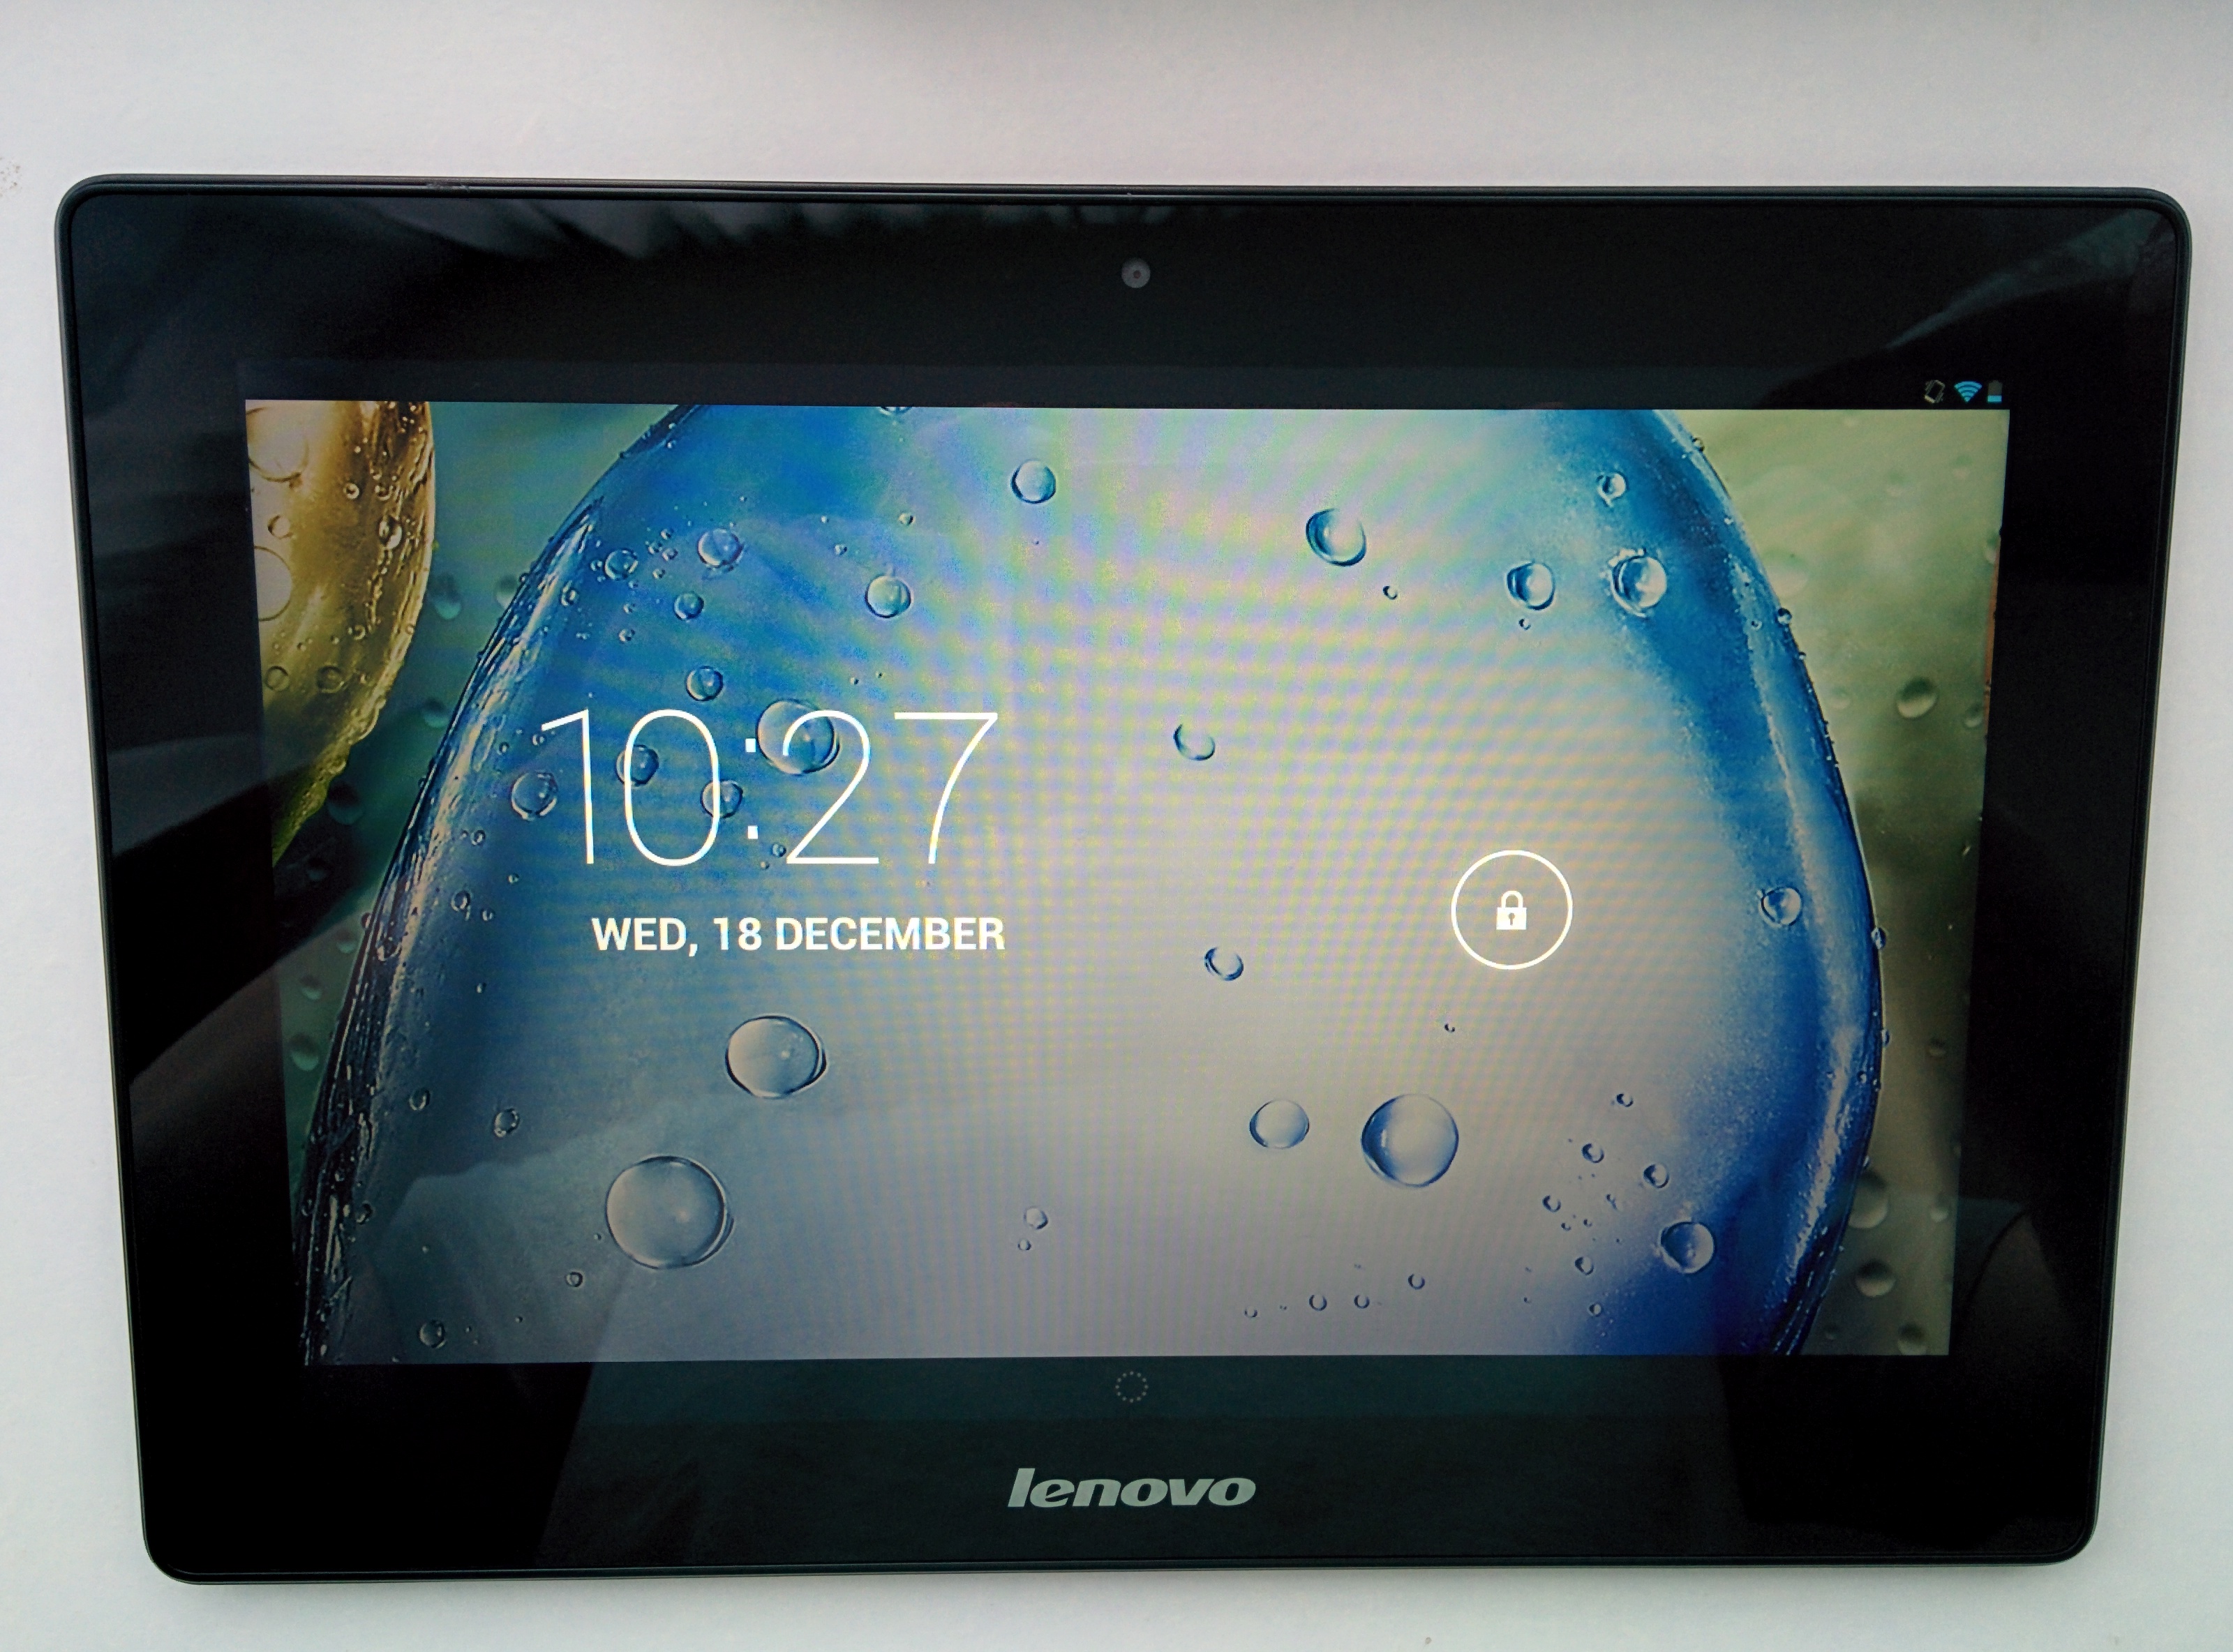 Lenovo IdeaTab S6000-F Wi-Fi 16GB Black Android Tablet | eBay